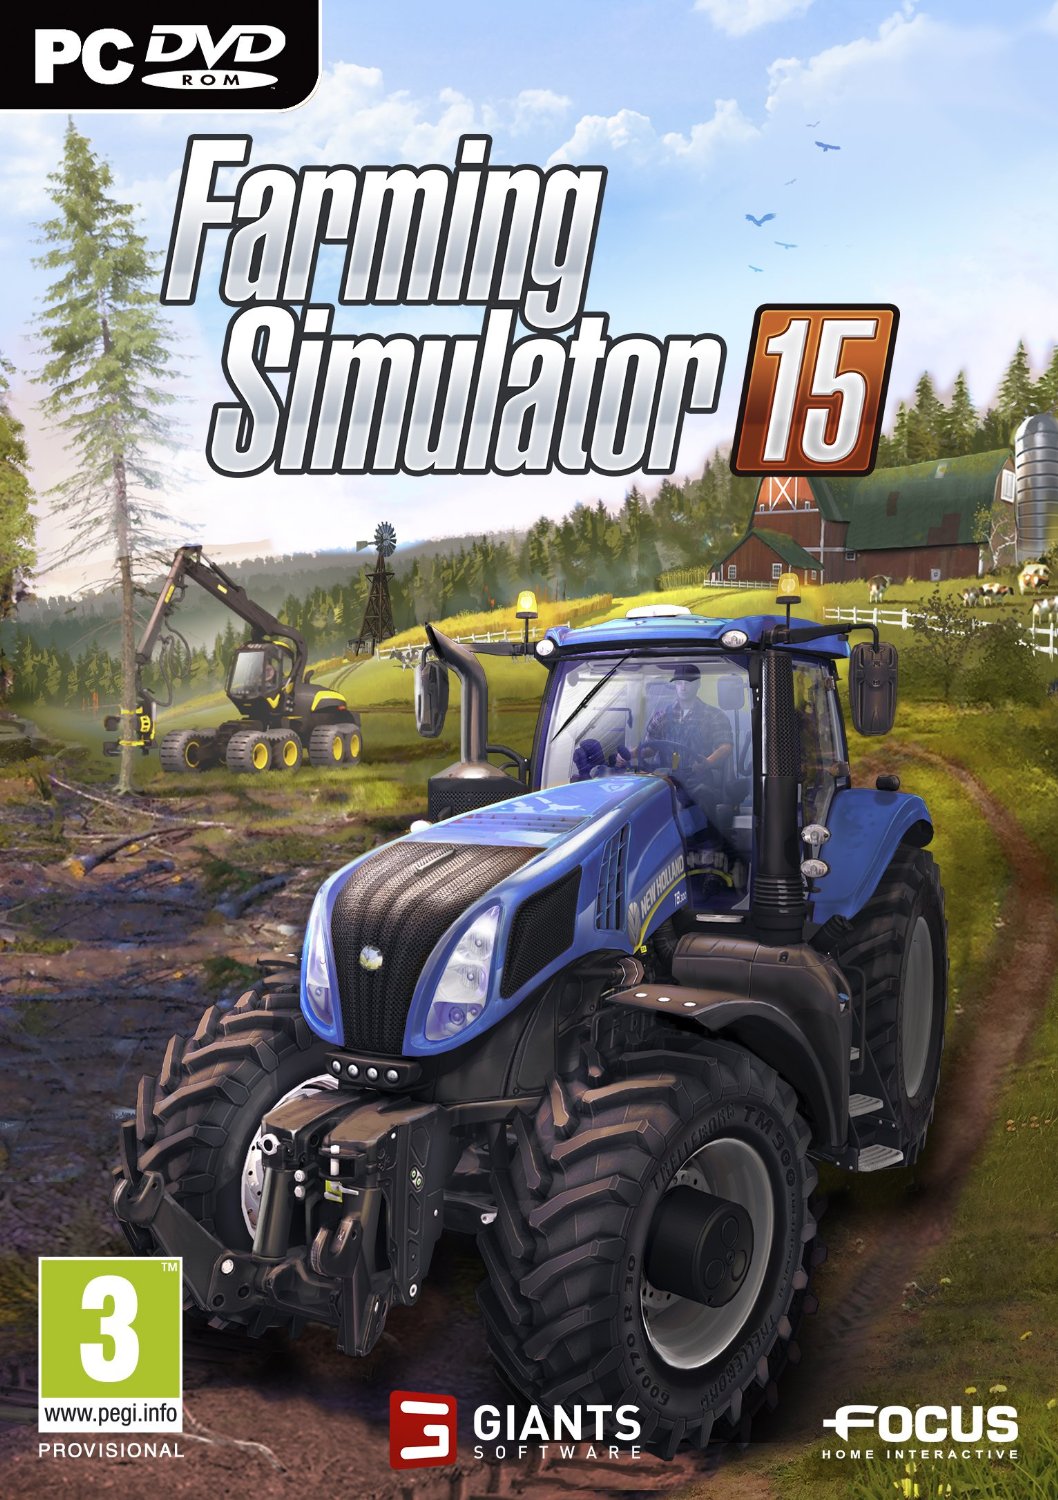 Farming Simulator 15 CD Key (Digital Download) - Instant Delivery